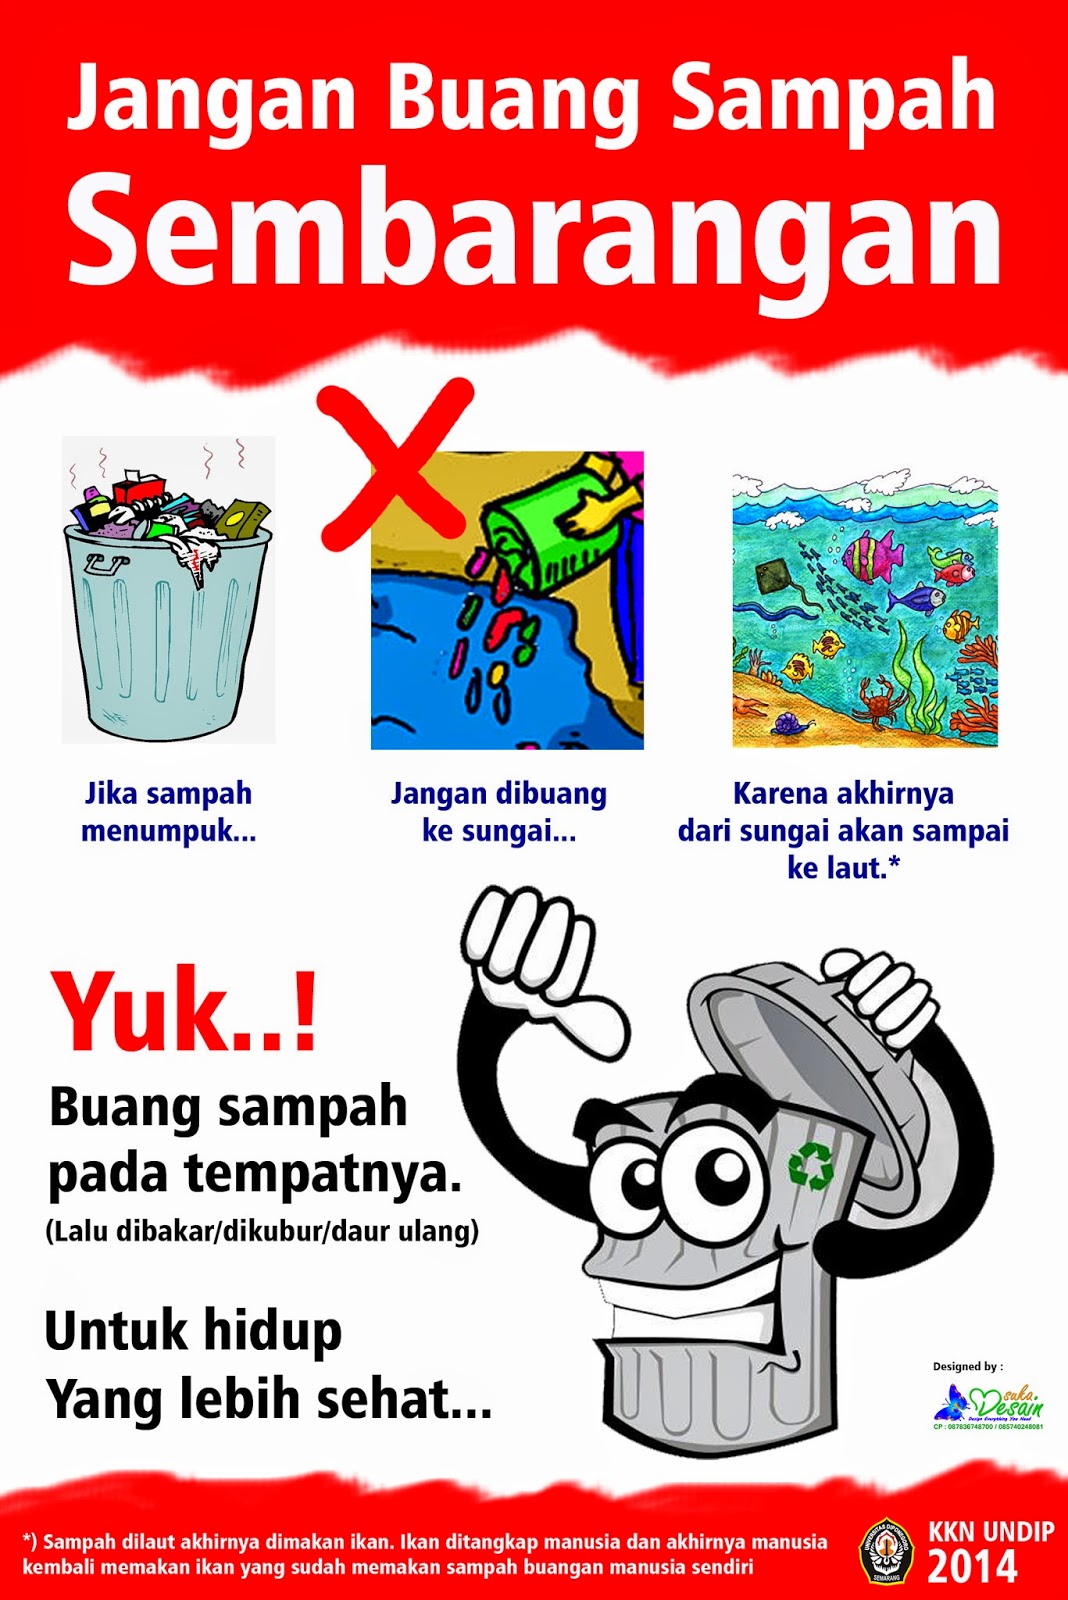 Poster Jangan Buang Sampah Sembarangan - SUKADESAIN